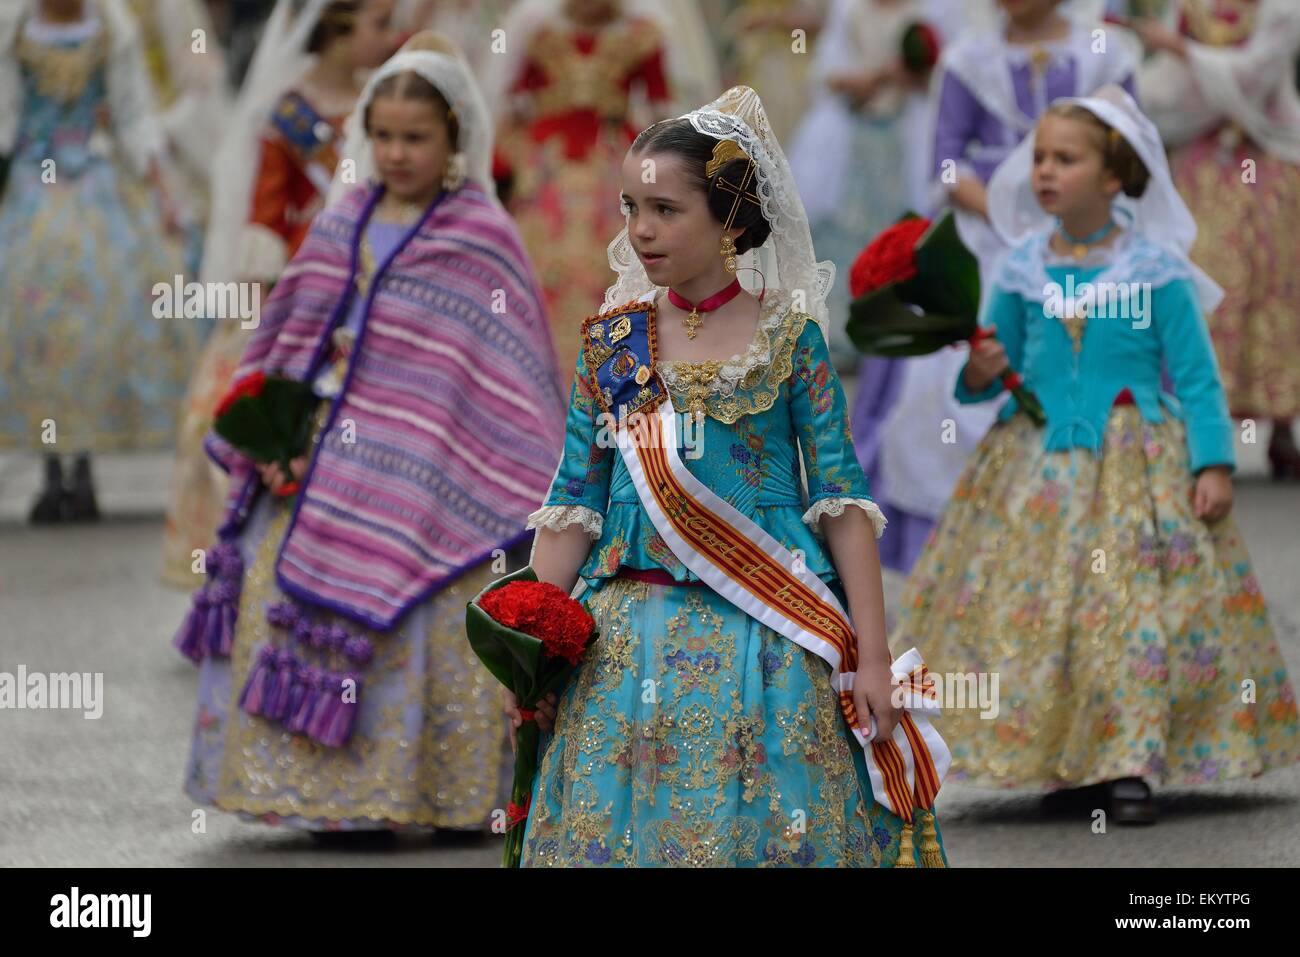 Fallas festival, girls in a traditional costume during the parade in the Plaza de la Virgen de los Desamparados, Valencia, Spain Stock Photo